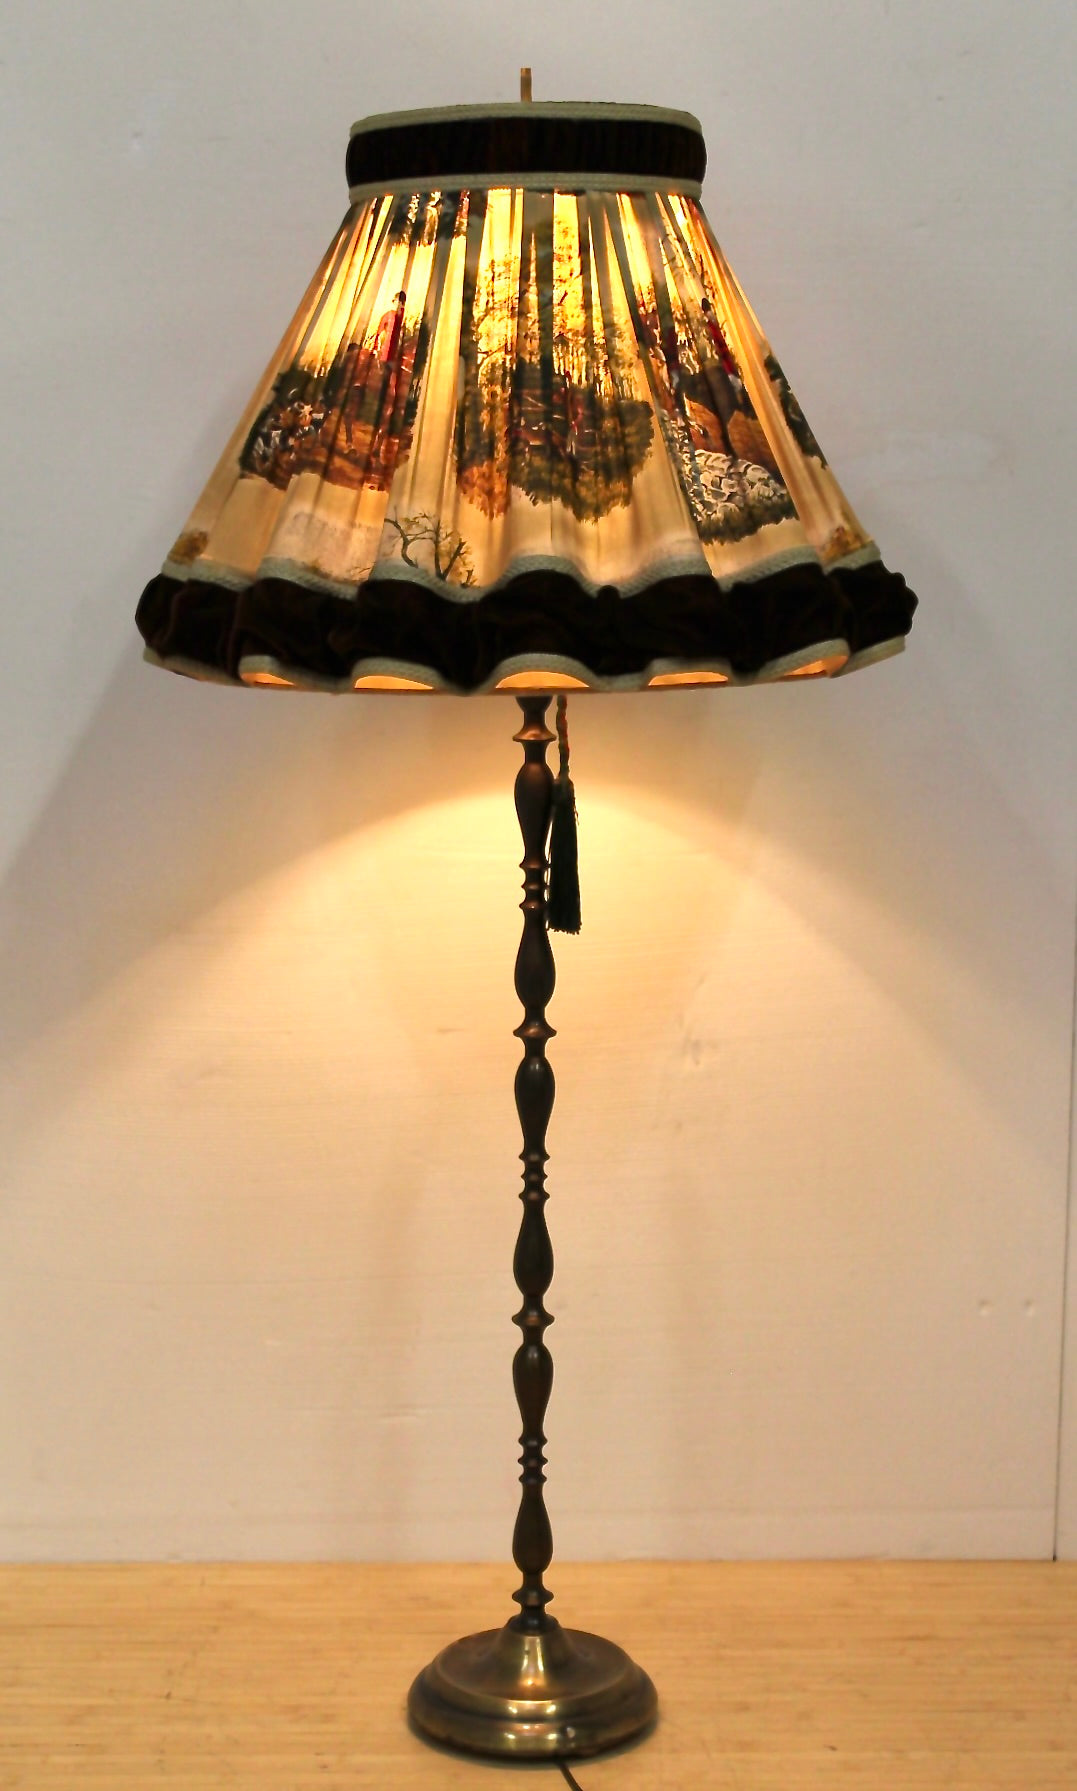 Floor lamp with hunting scene fabric shade.